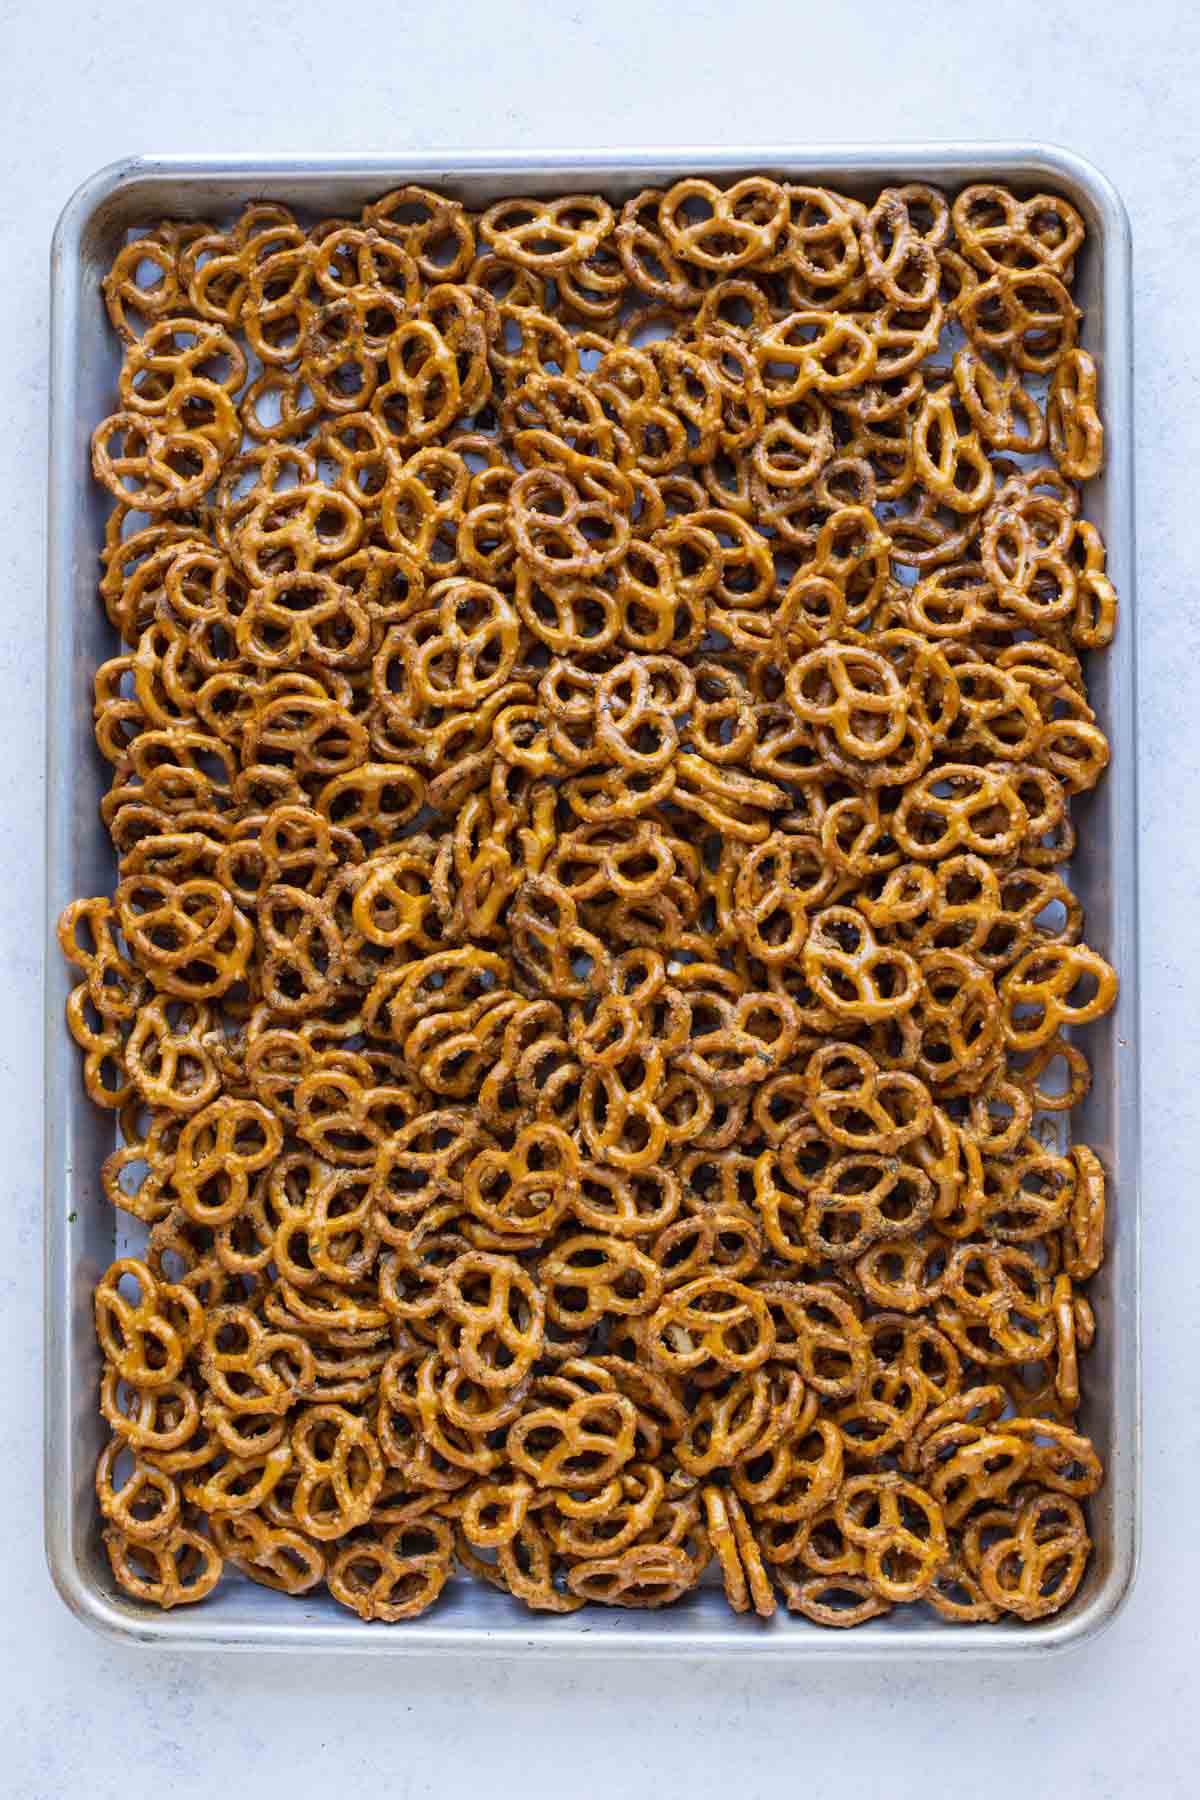 A large baking sheet is full of seasoned pretzels.